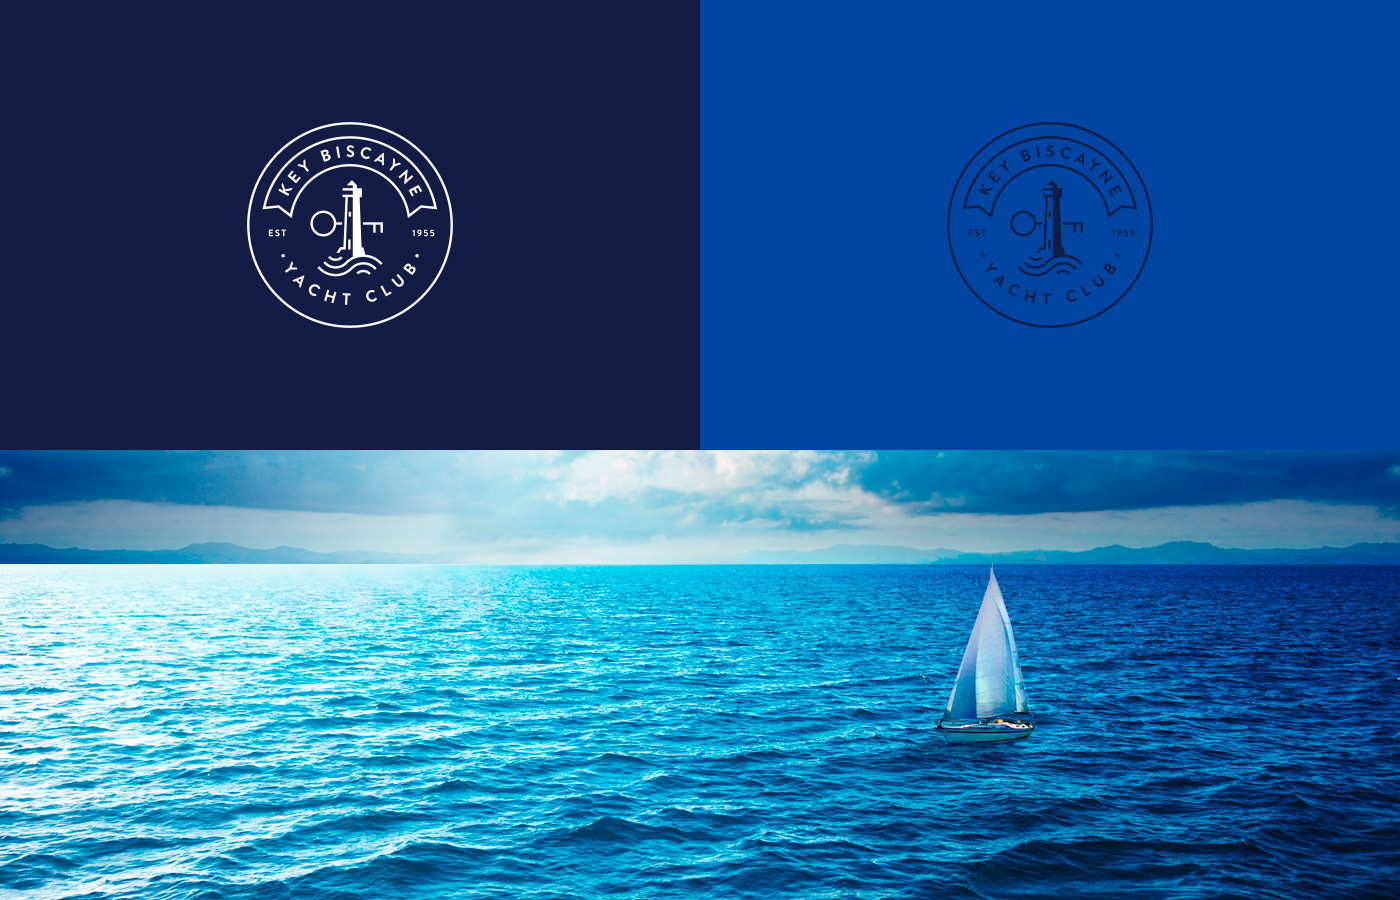 yacht sea Key Biscayne miami sailing club Ocean blue boat lighthouse